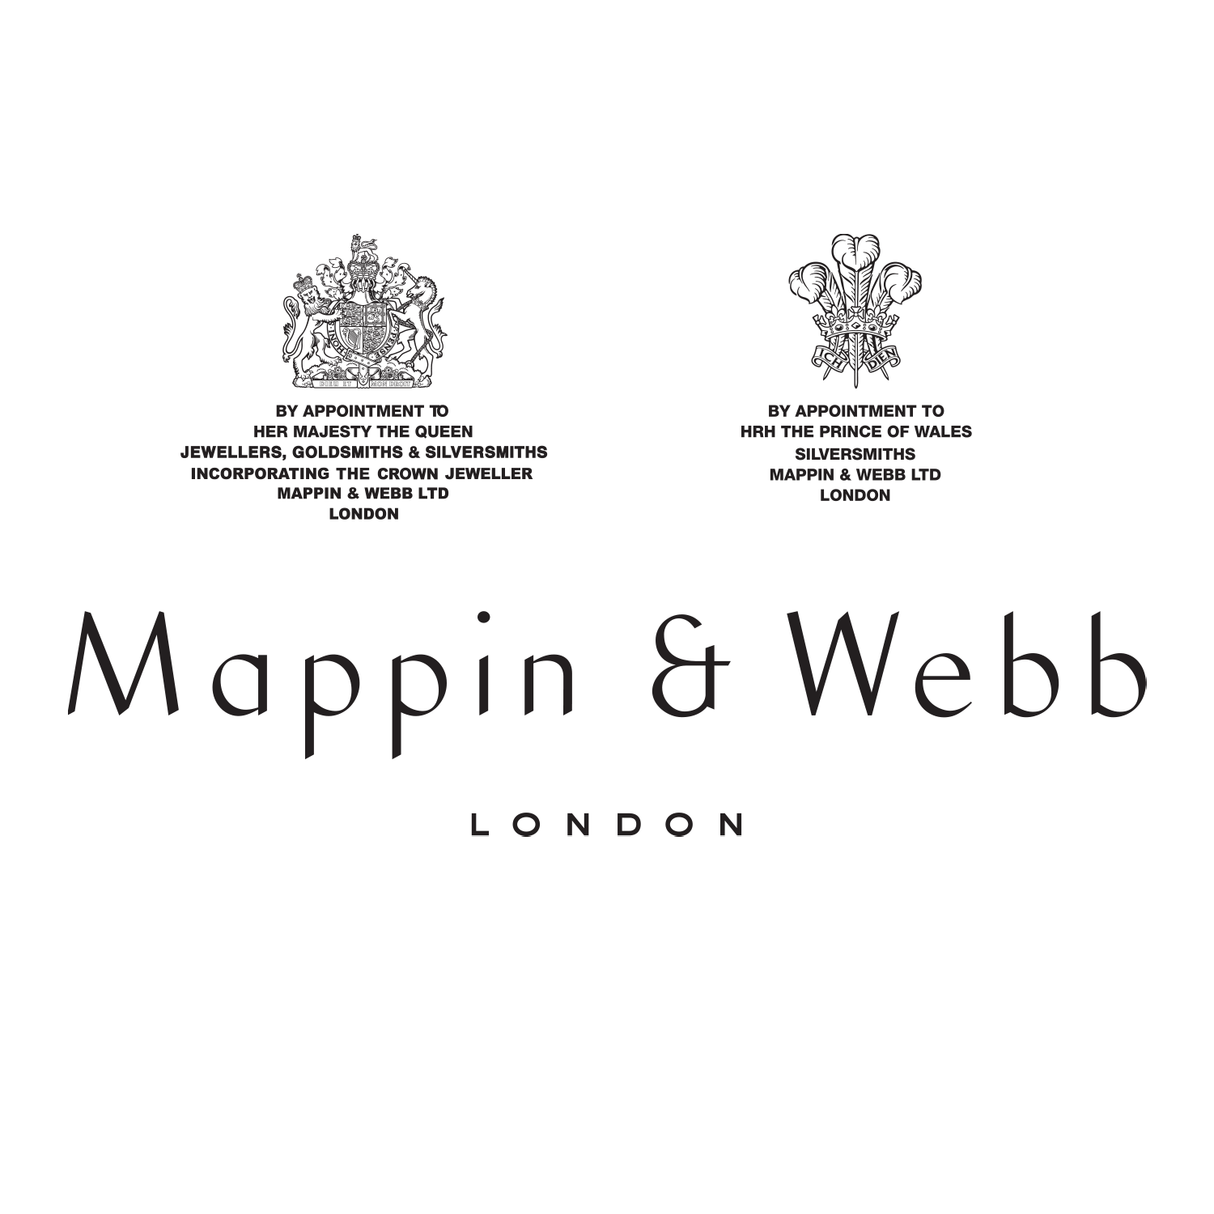 Mappin & Webb Team GB Sterling Silver Lion Head Round Cufflinks